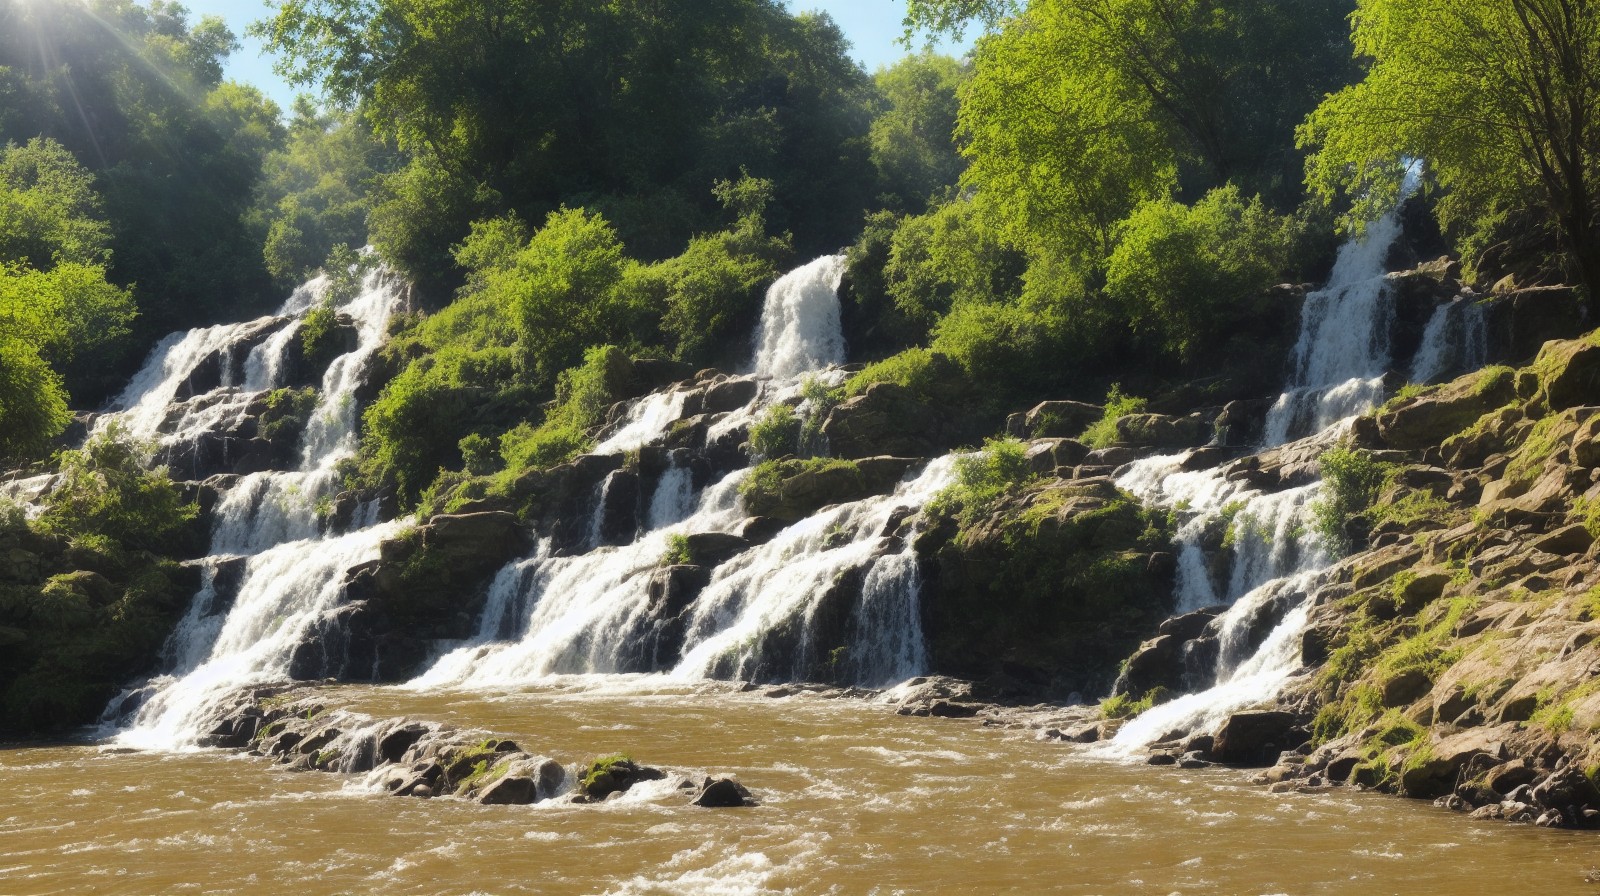 photo of waterfall on stream in sunlight